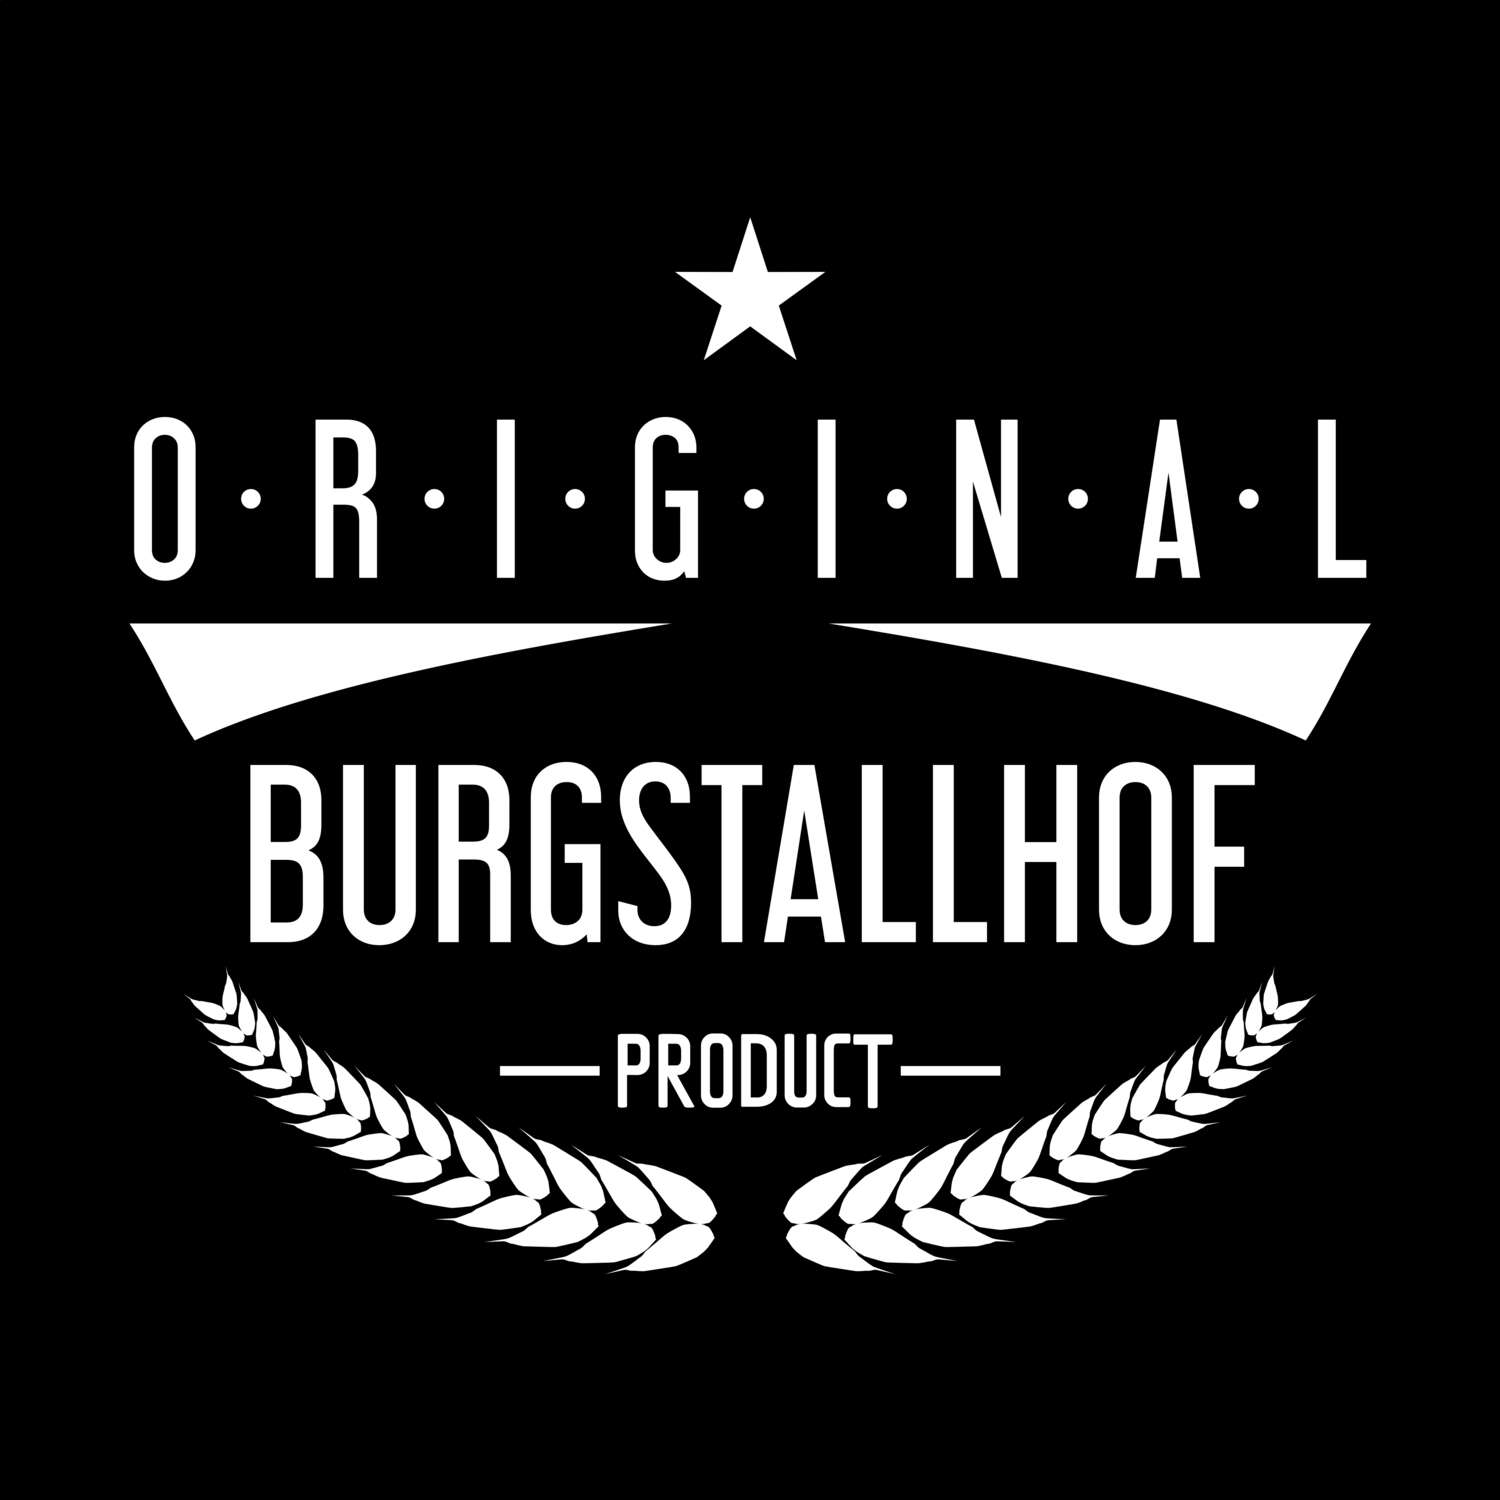 Burgstallhof T-Shirt »Original Product«